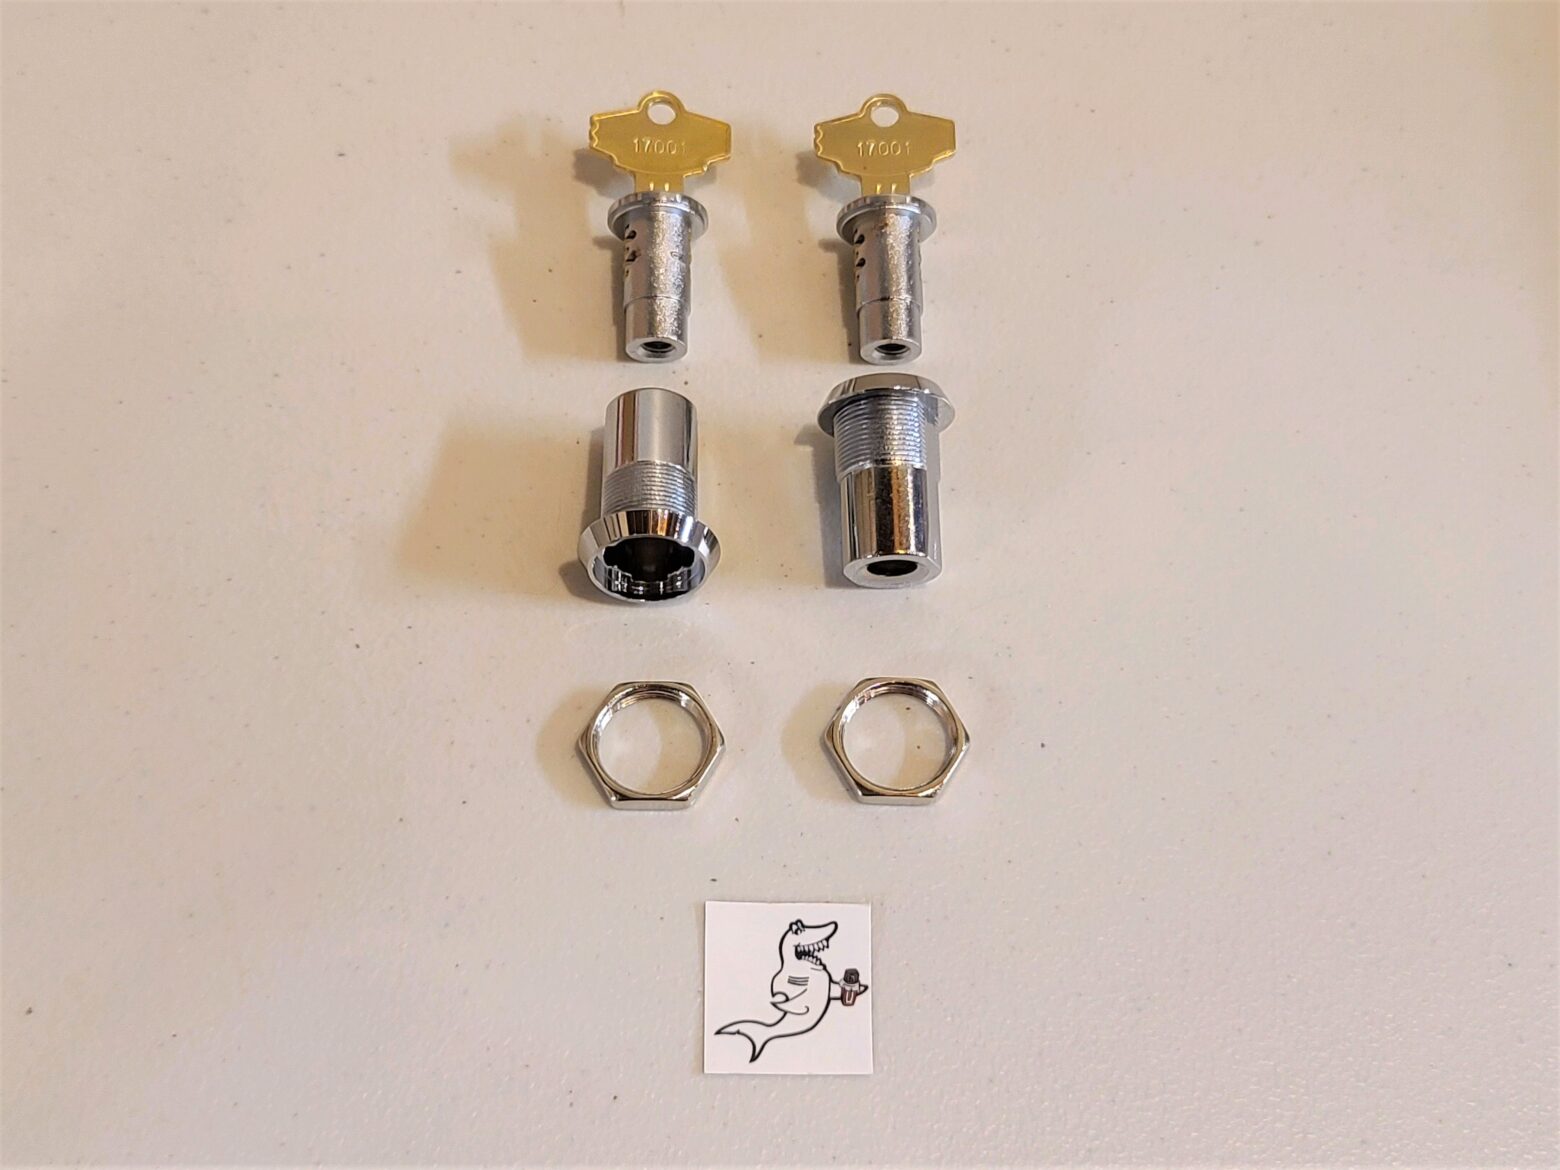 Northwestern Eagle 2 Nuts 1/4 Thread A&A Keys HOUSING Oak KOMET Gumball Machine #17001 Locks 